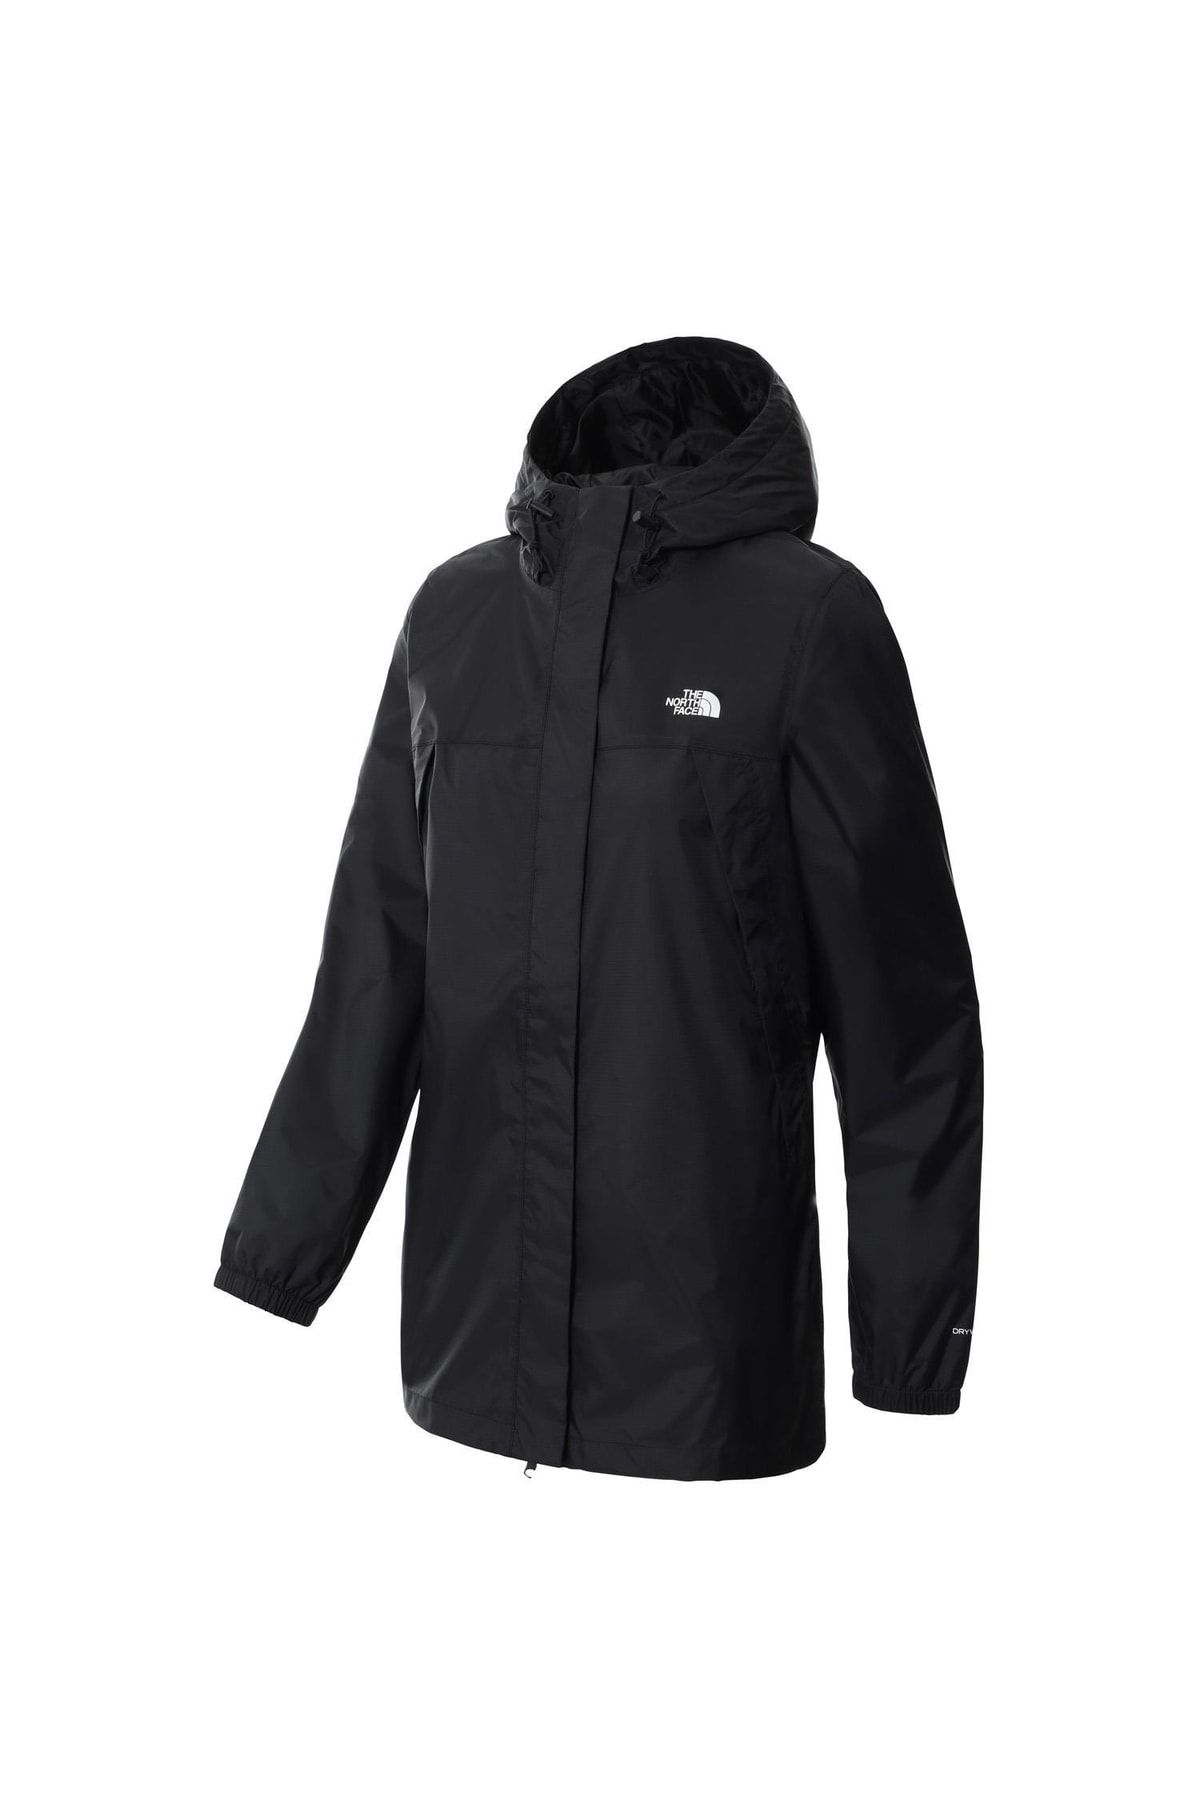 The North Face W Antora Jacket Kadın Ceket Nf0a7qeujk31